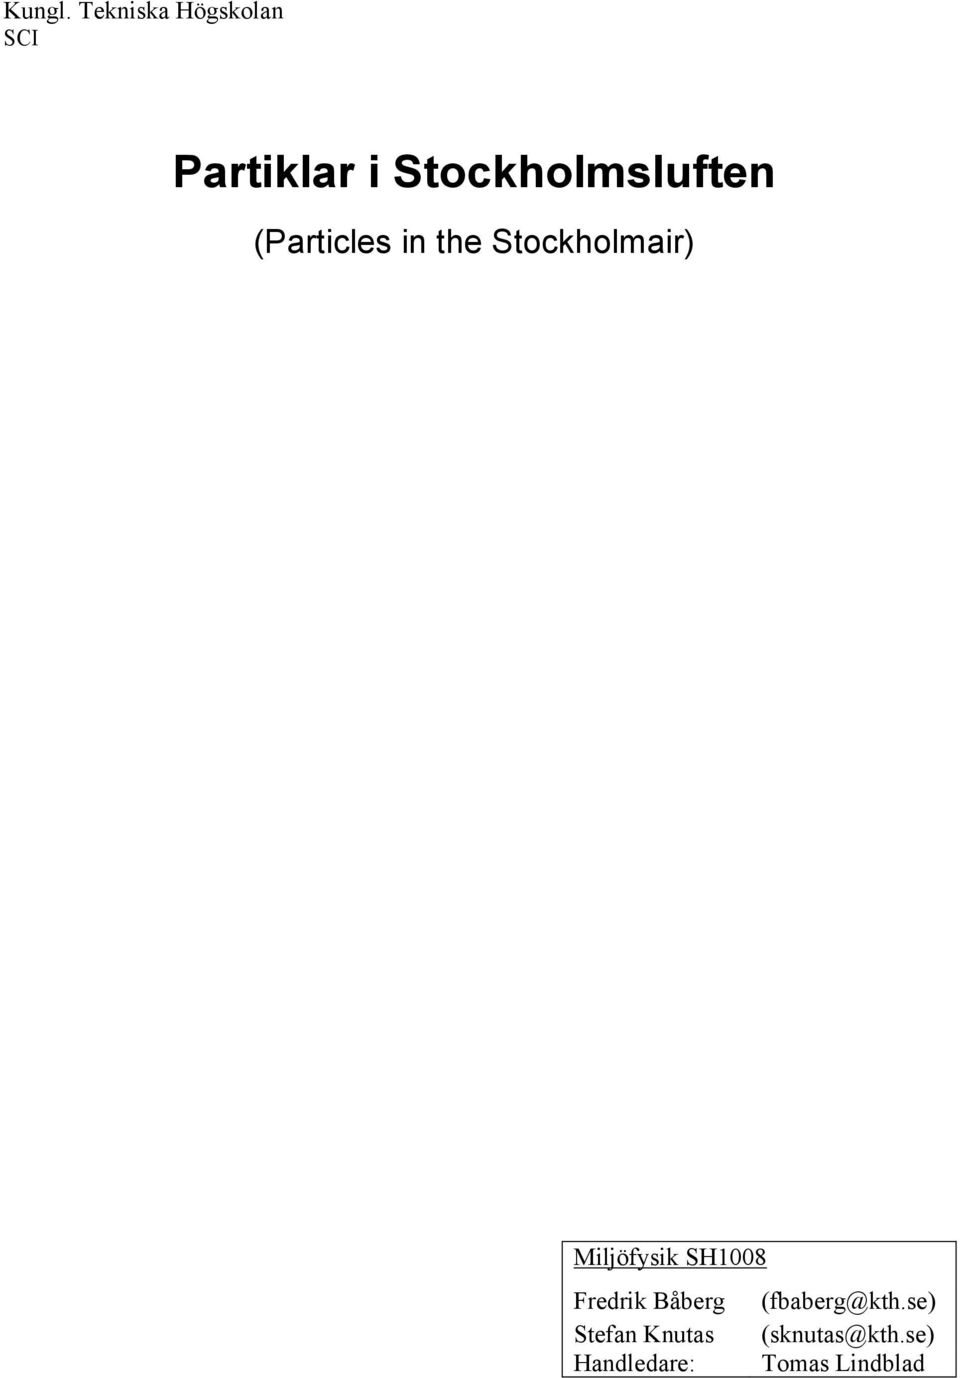 Stockholmsluften (Particles in the Stockholmair)